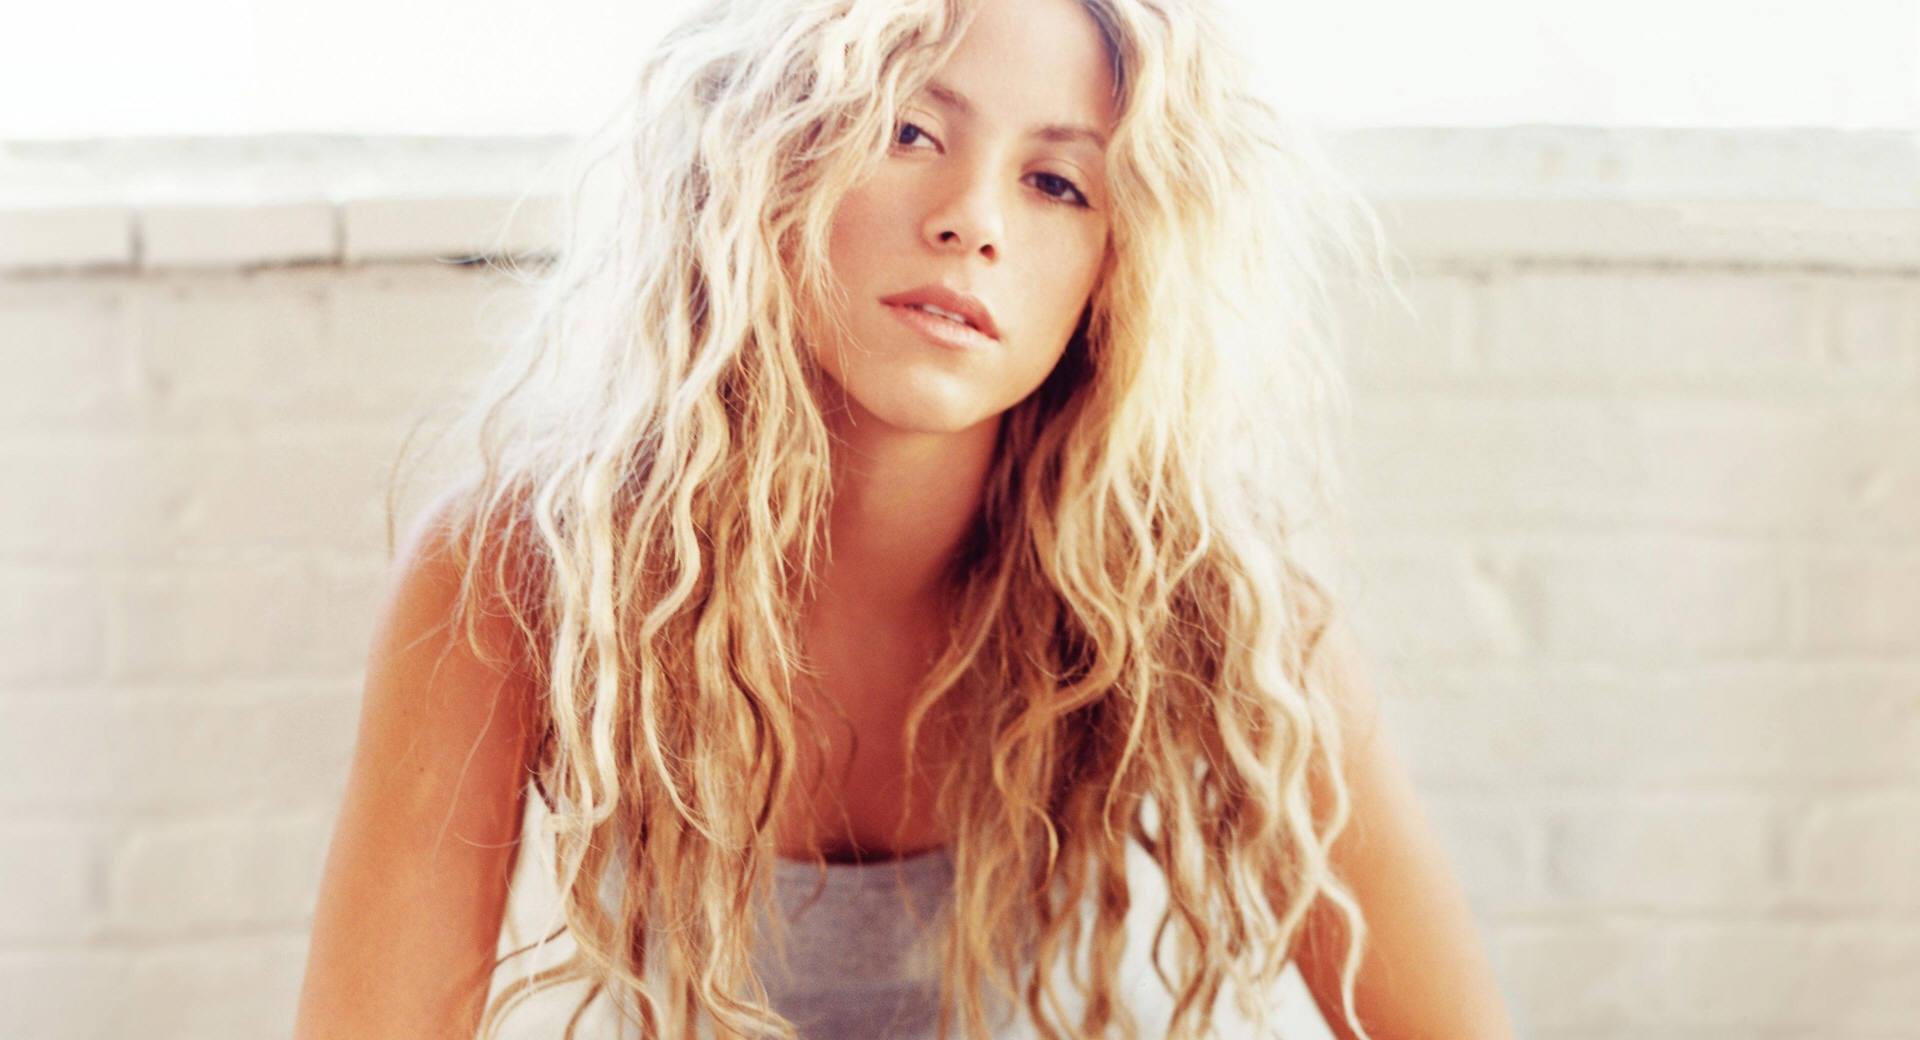 Shakira Mebarak at 640 x 1136 iPhone 5 size wallpapers HD quality